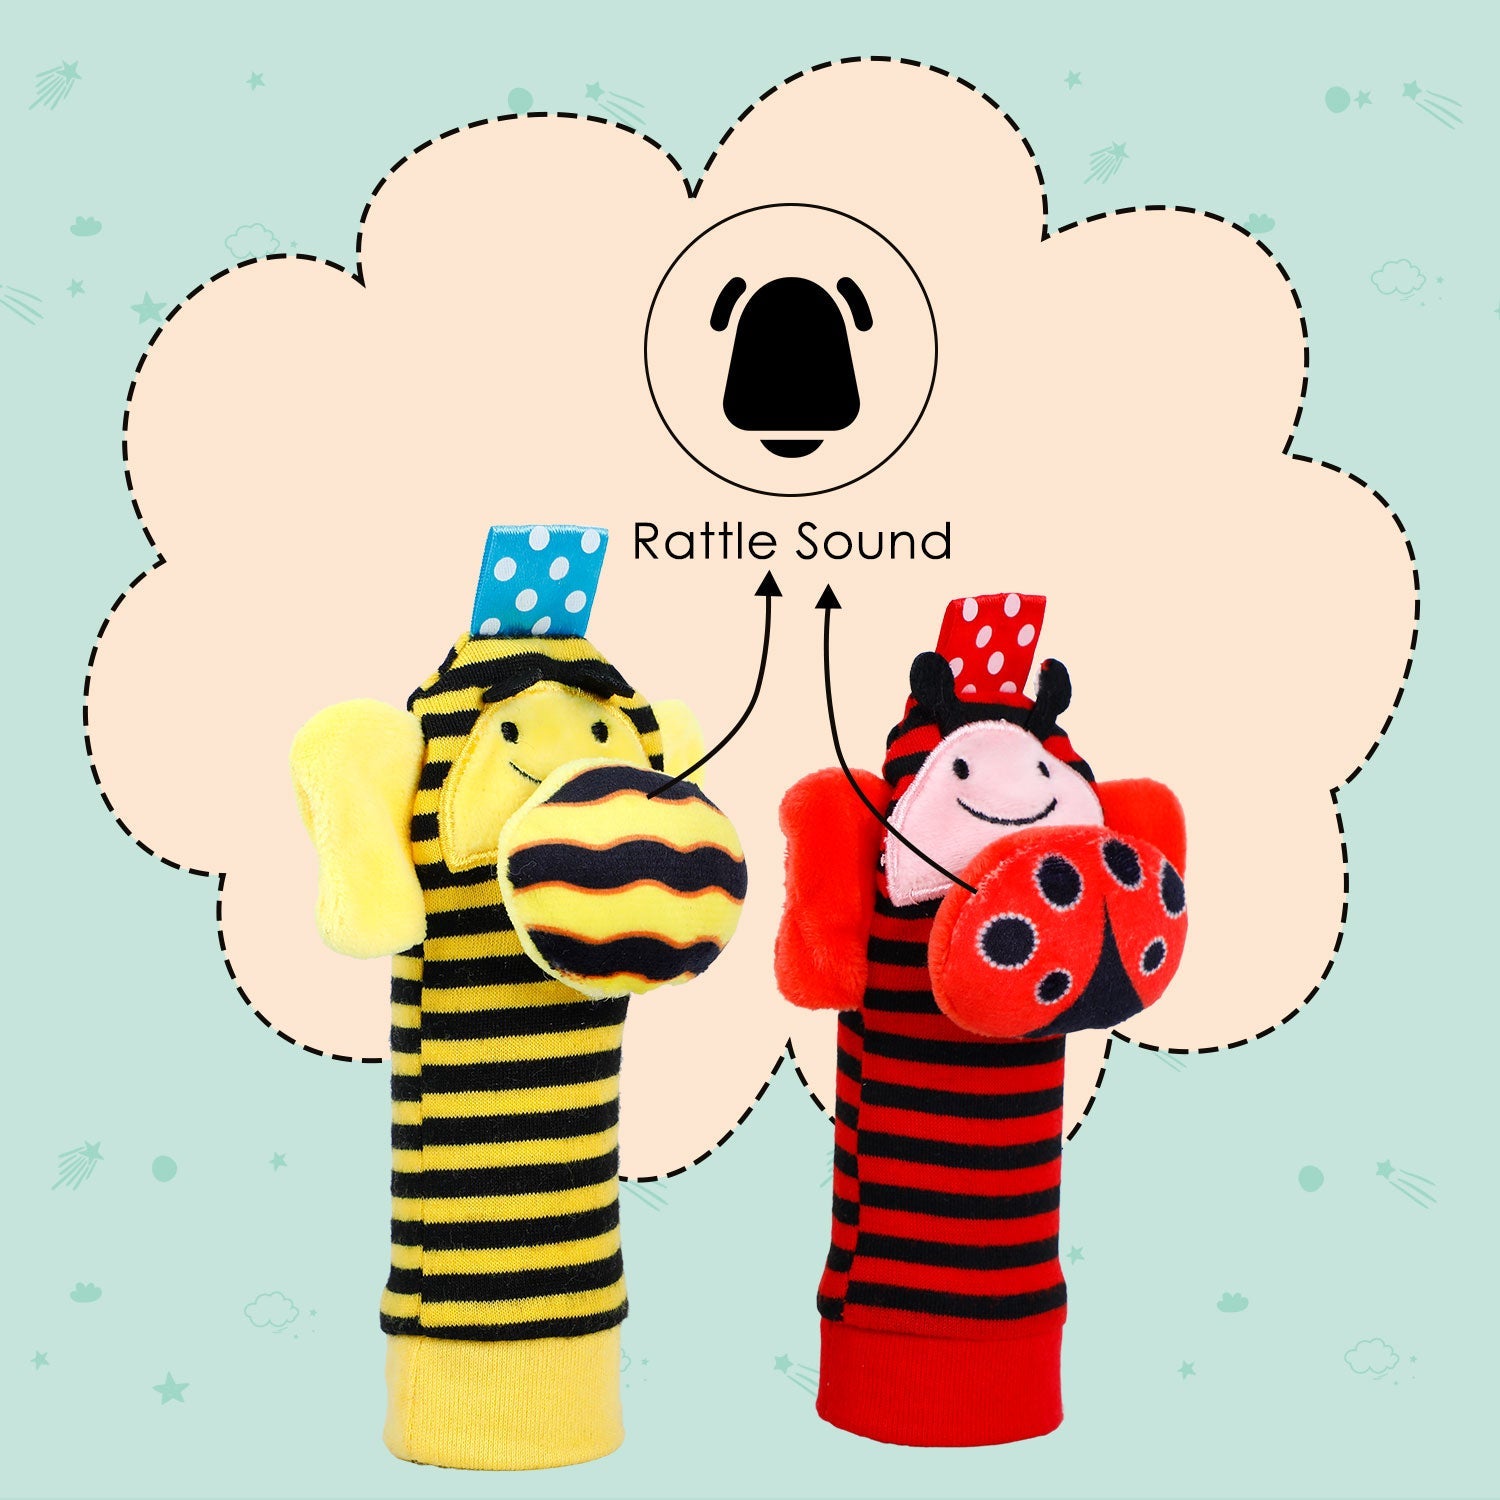 Baby Moo Buzzing Bee And Ladybug Striped Set of 2 Socks Rattle - Red, Yellow